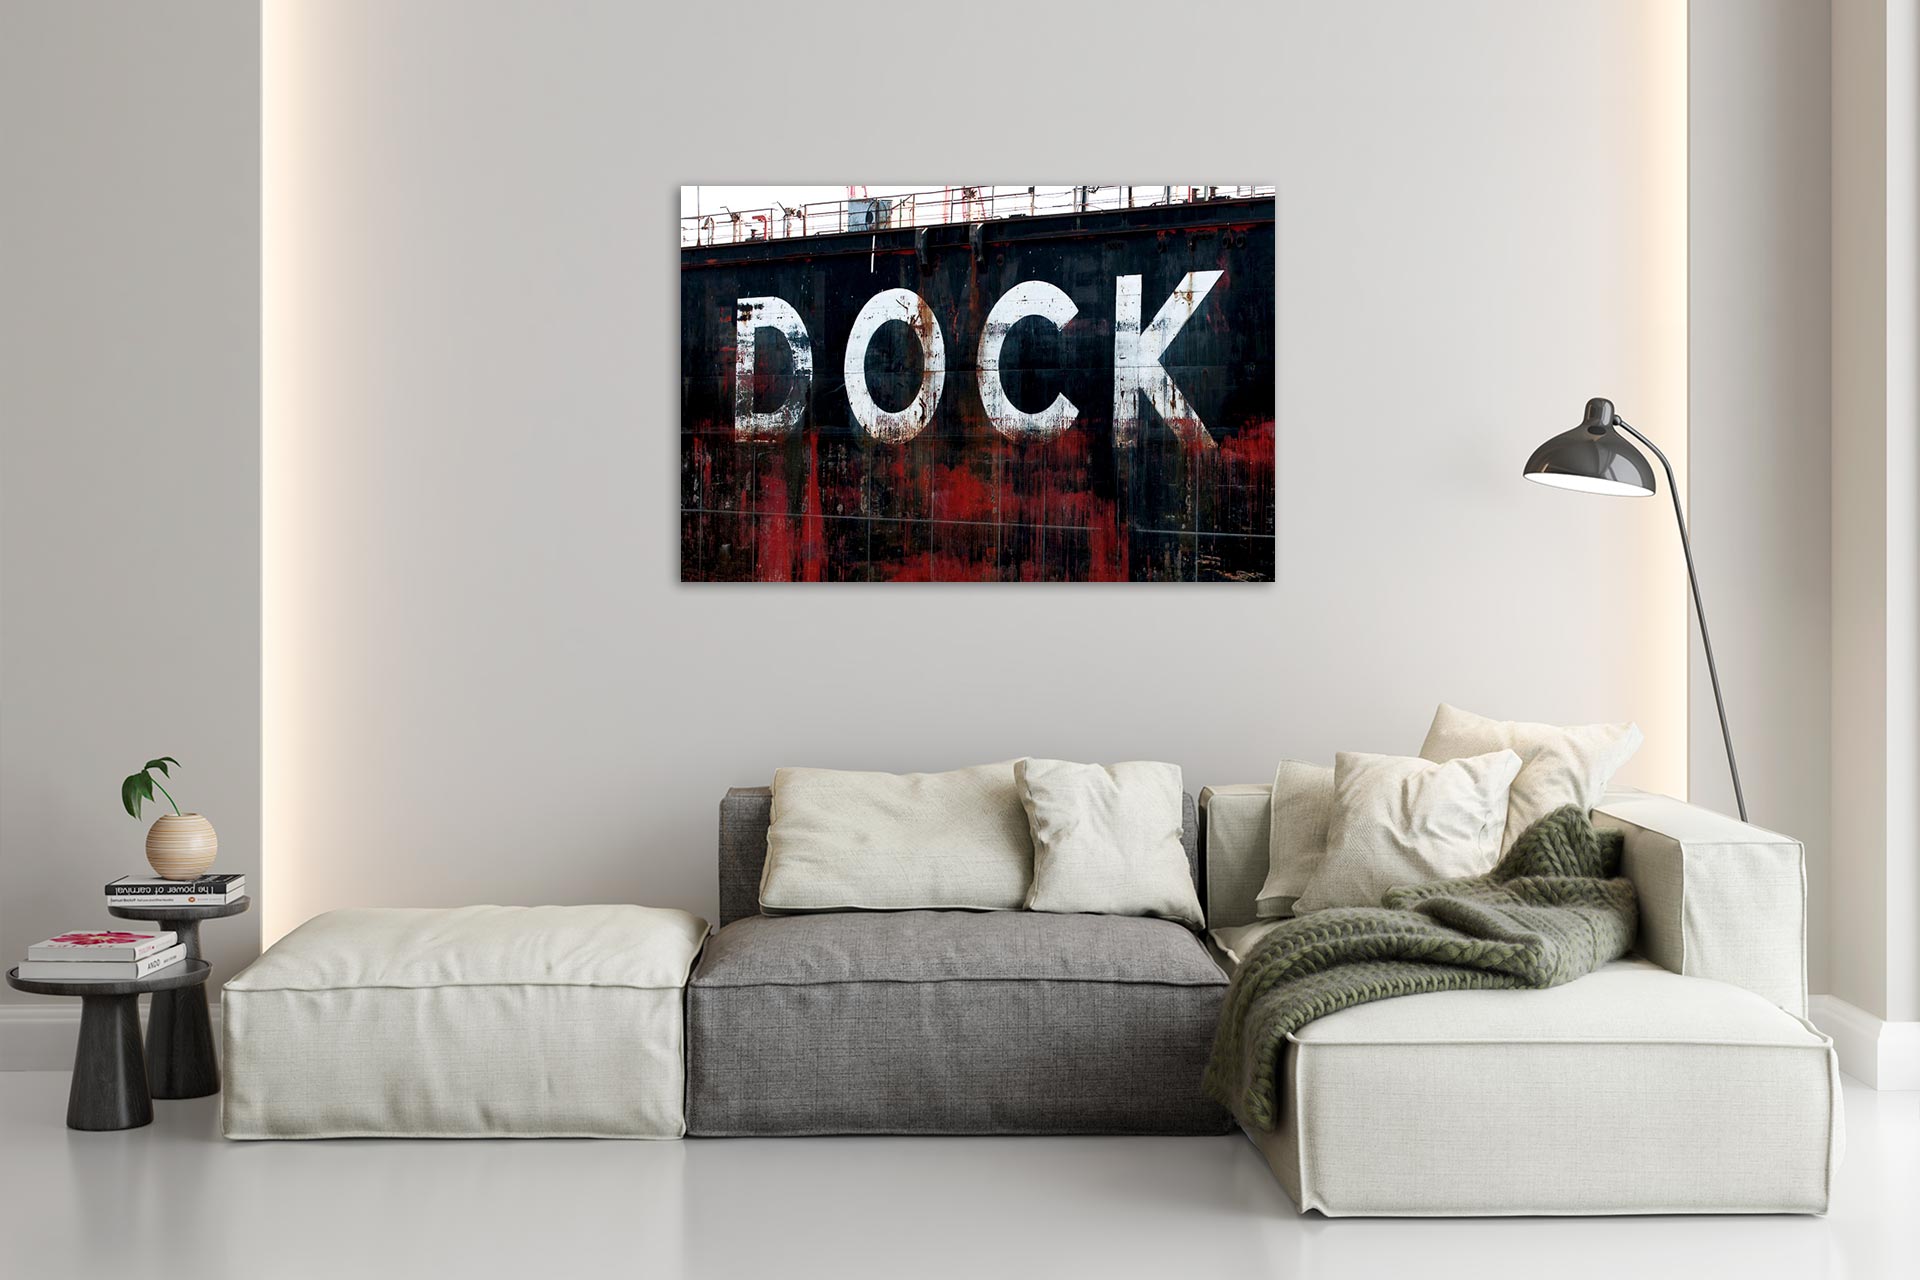 NL001-dock-hamburg-wandbild-bild-auf-leinwand-acrylglas-aludibond-wohnzimmer